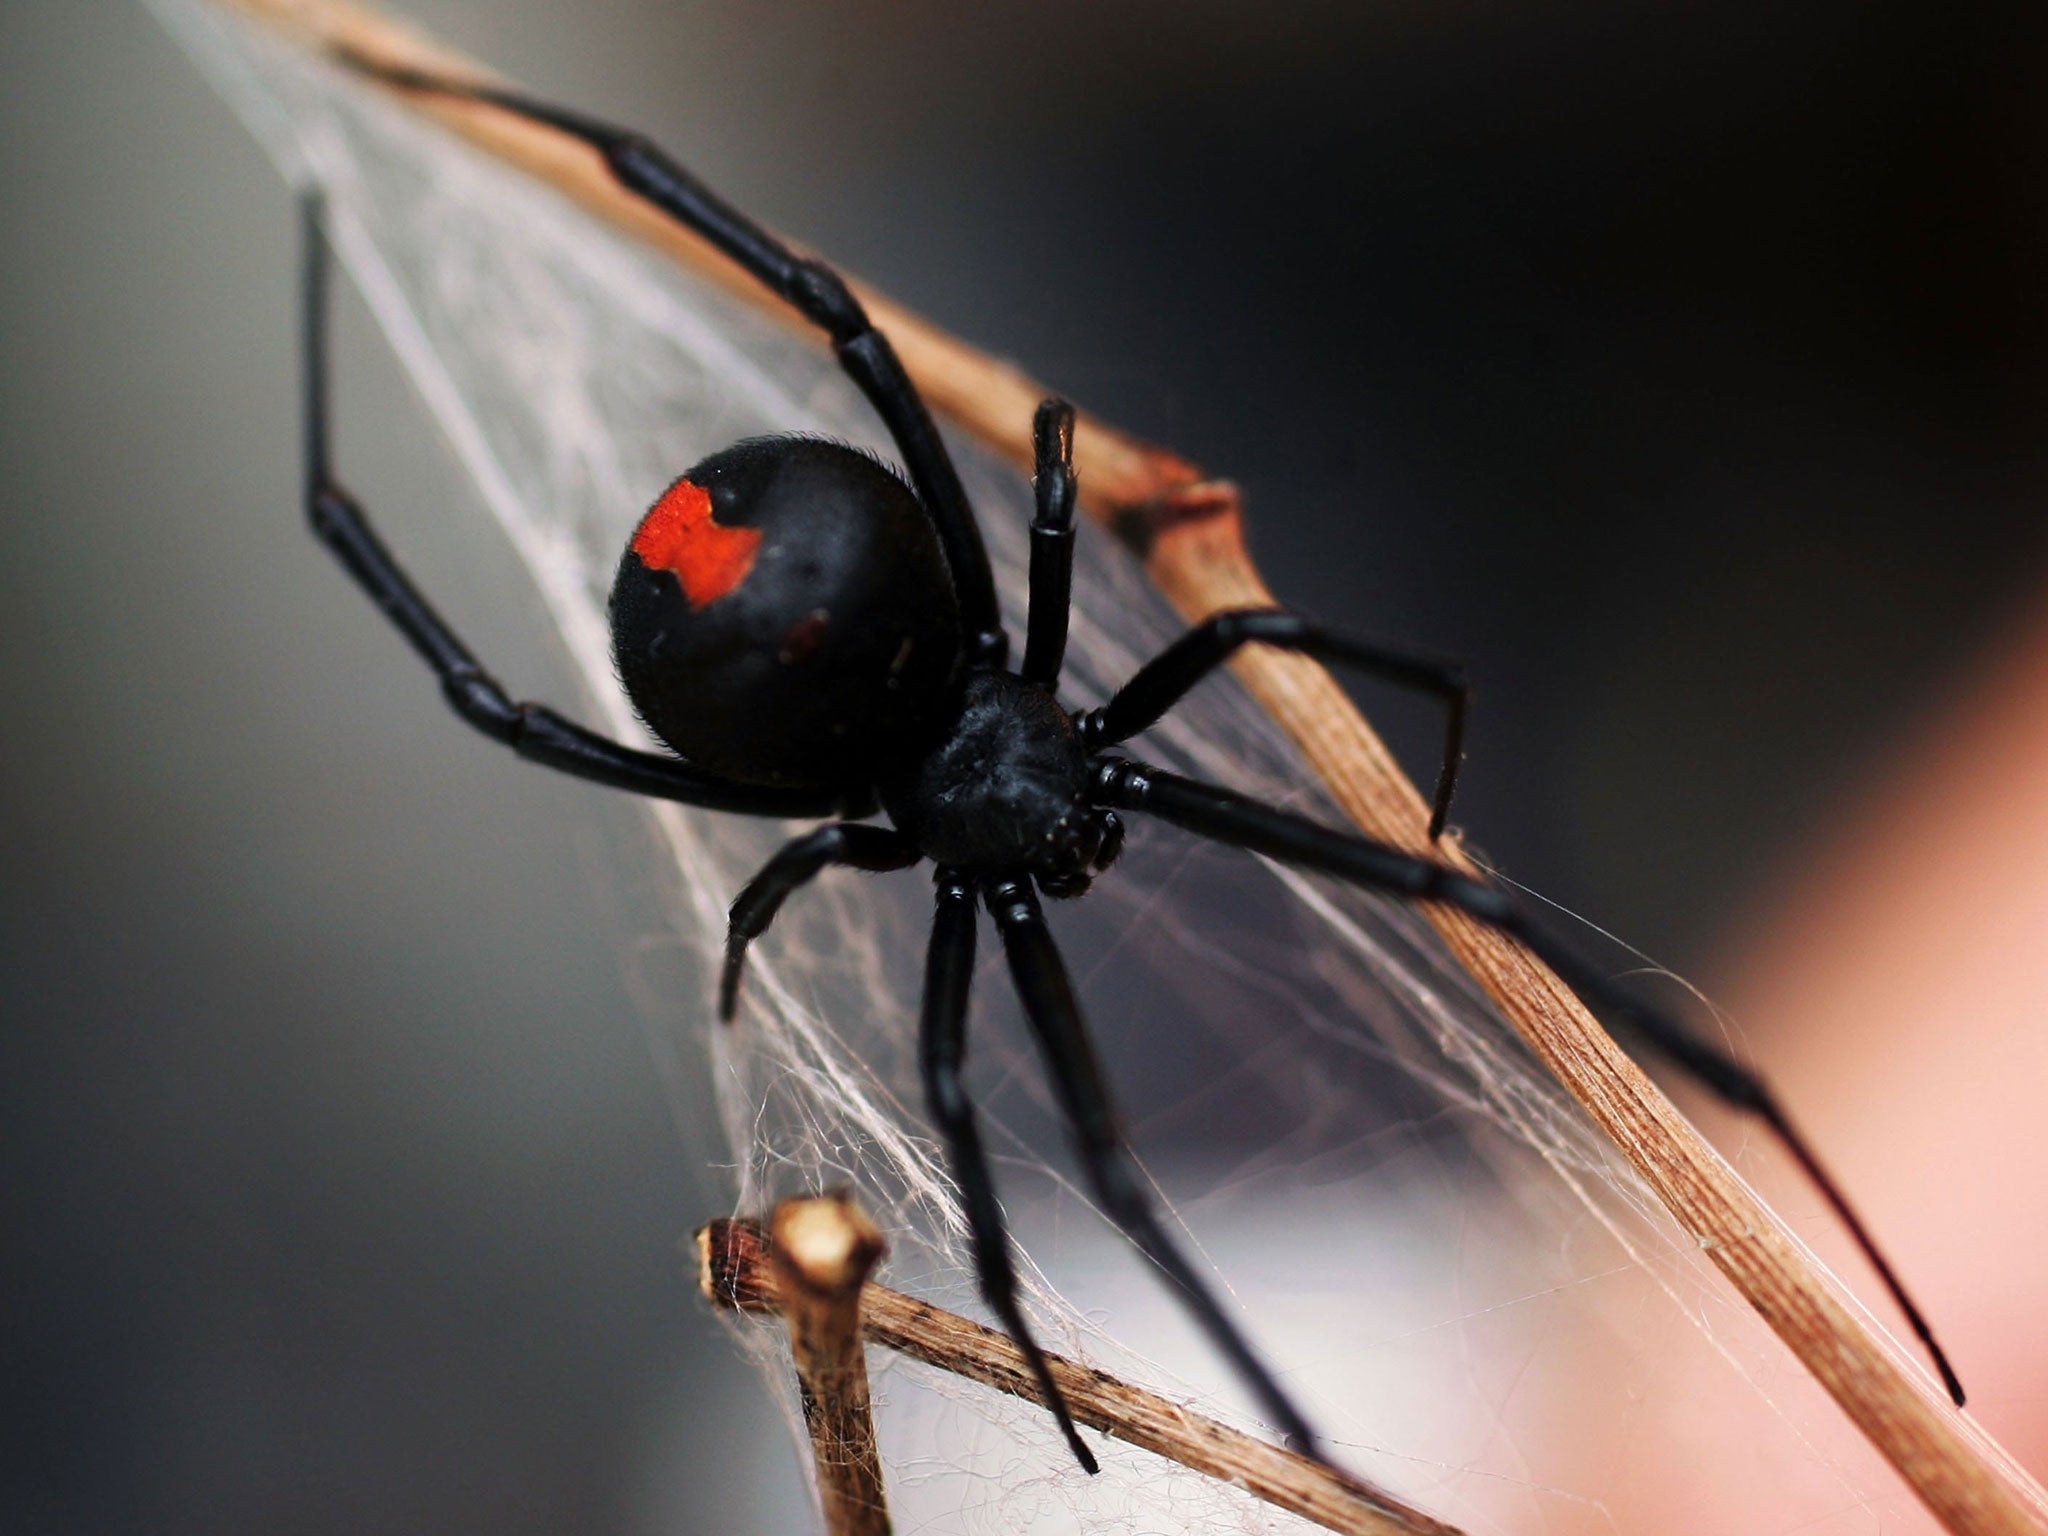 Black widow spider bites rarely result in death in humans